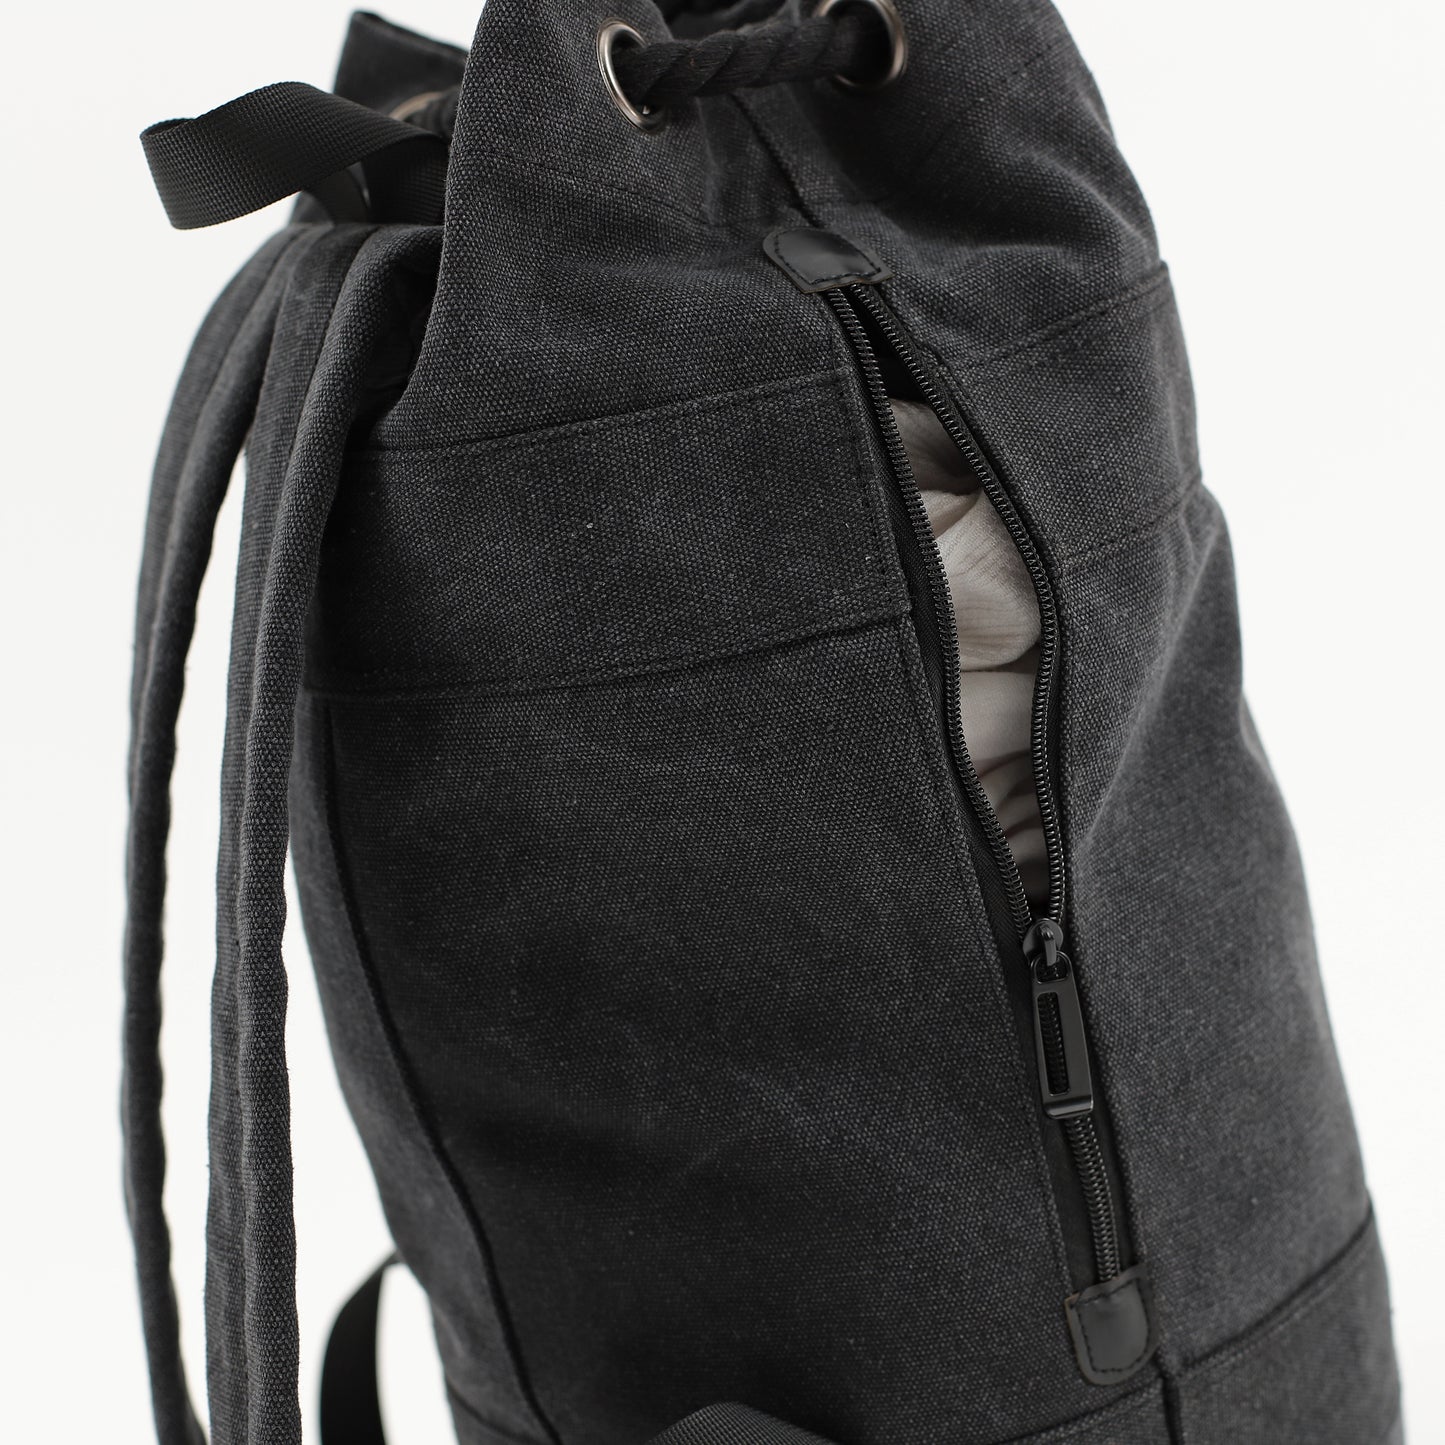 "Barrage" Gear Bag - Black